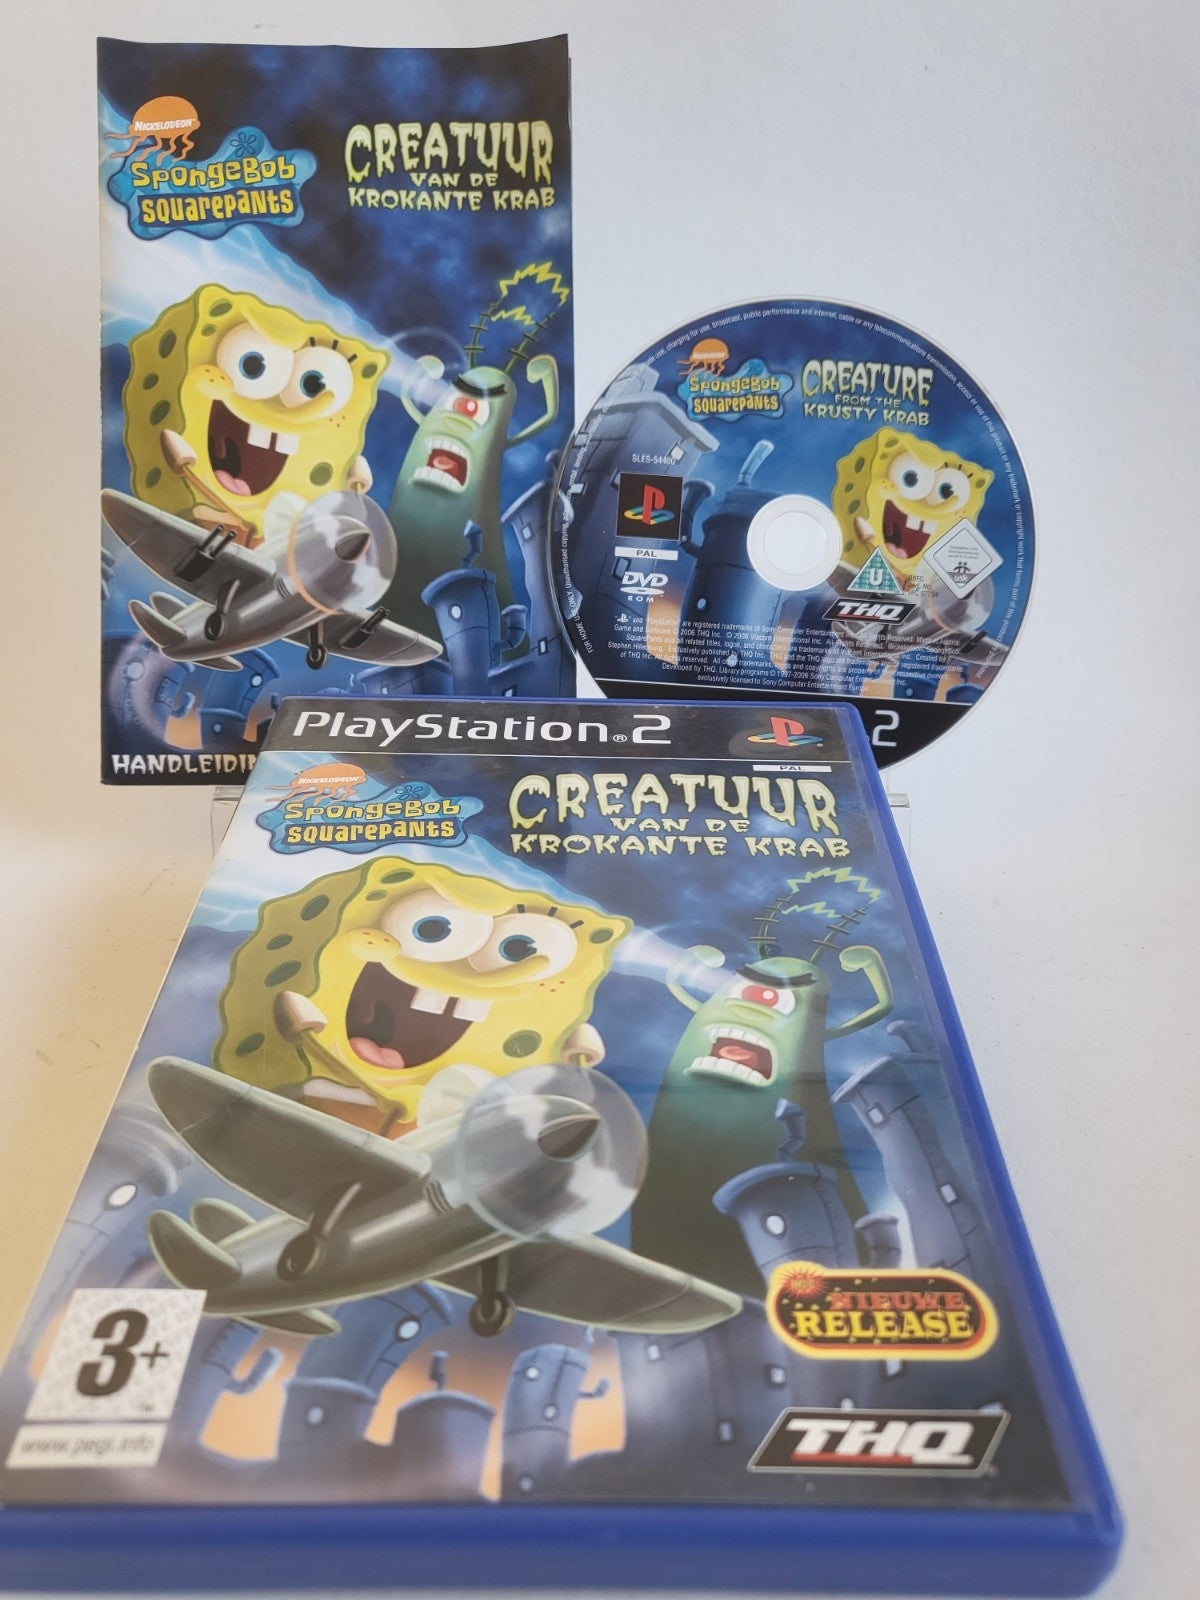 SpongeBob SquarePants Creatuur van de Krokante Krab Playstation 2